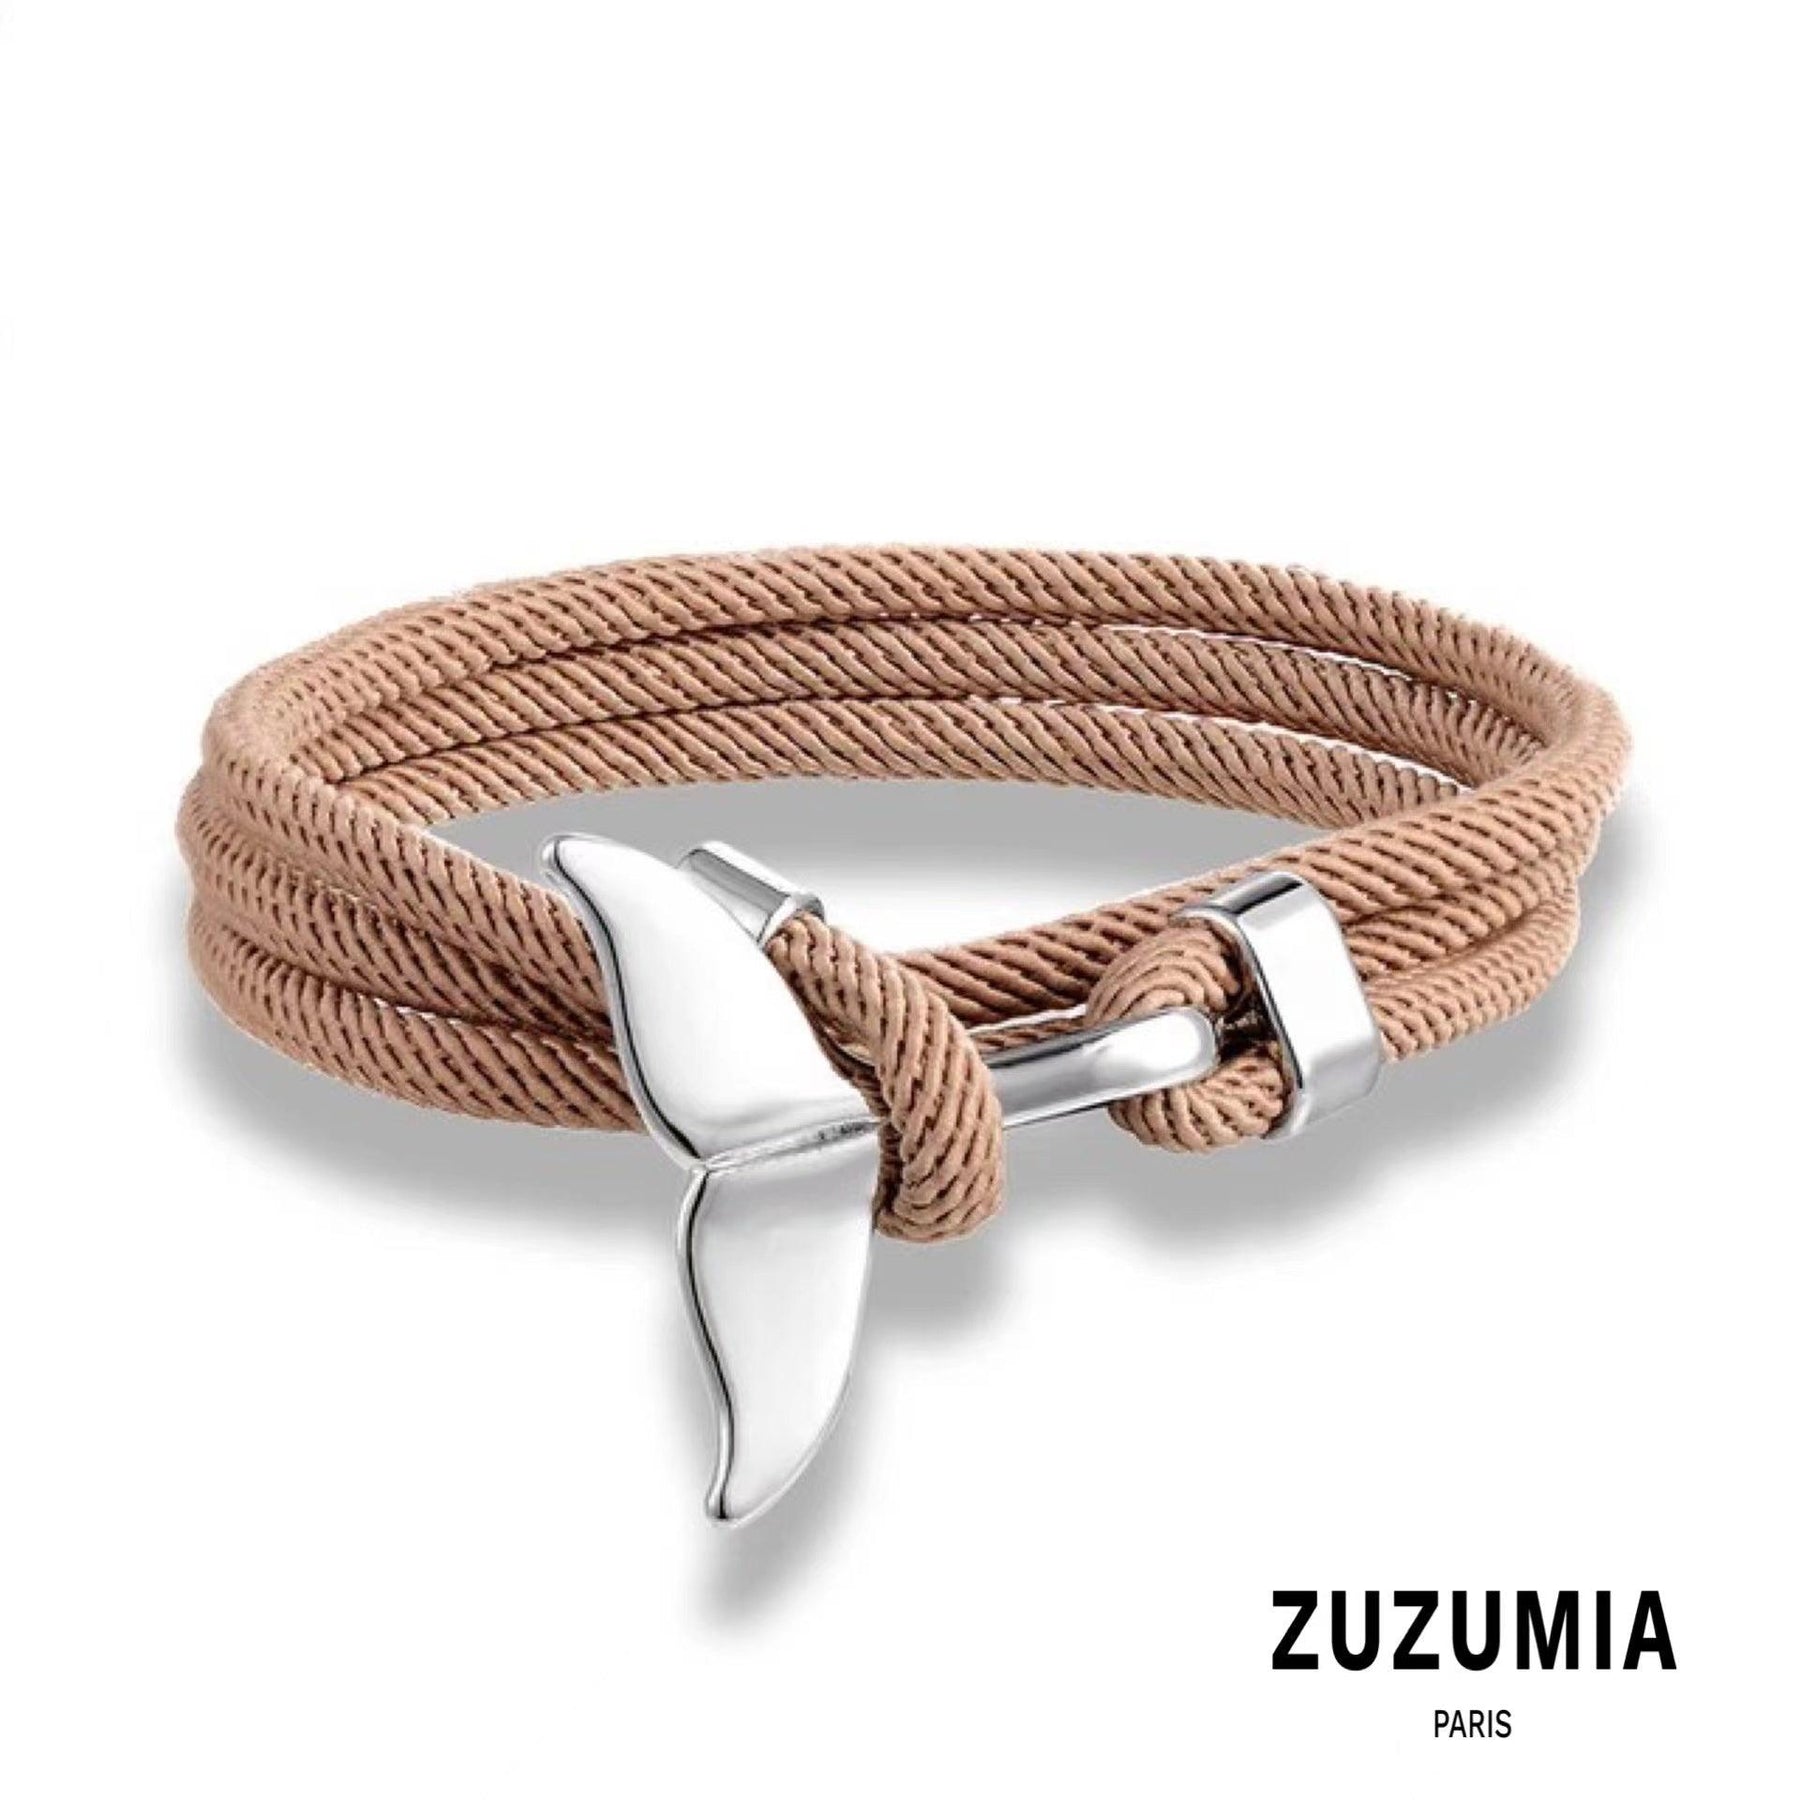 Whale Tail Anchor Bracelets